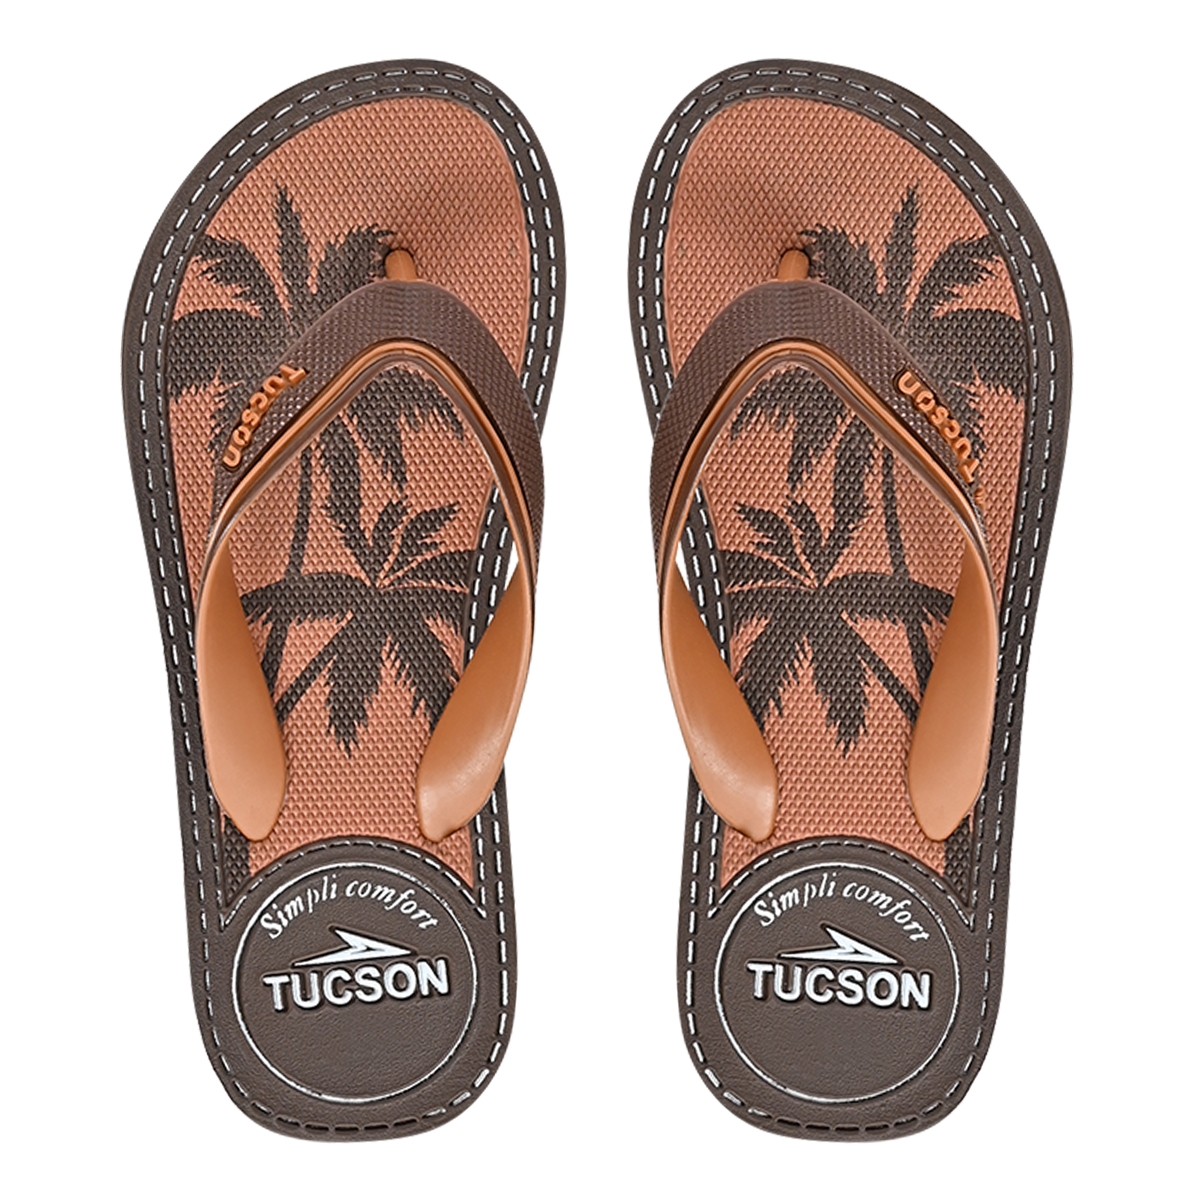 Footwear | Tucson Size 5 Slippers | Freeup-sgquangbinhtourist.com.vn